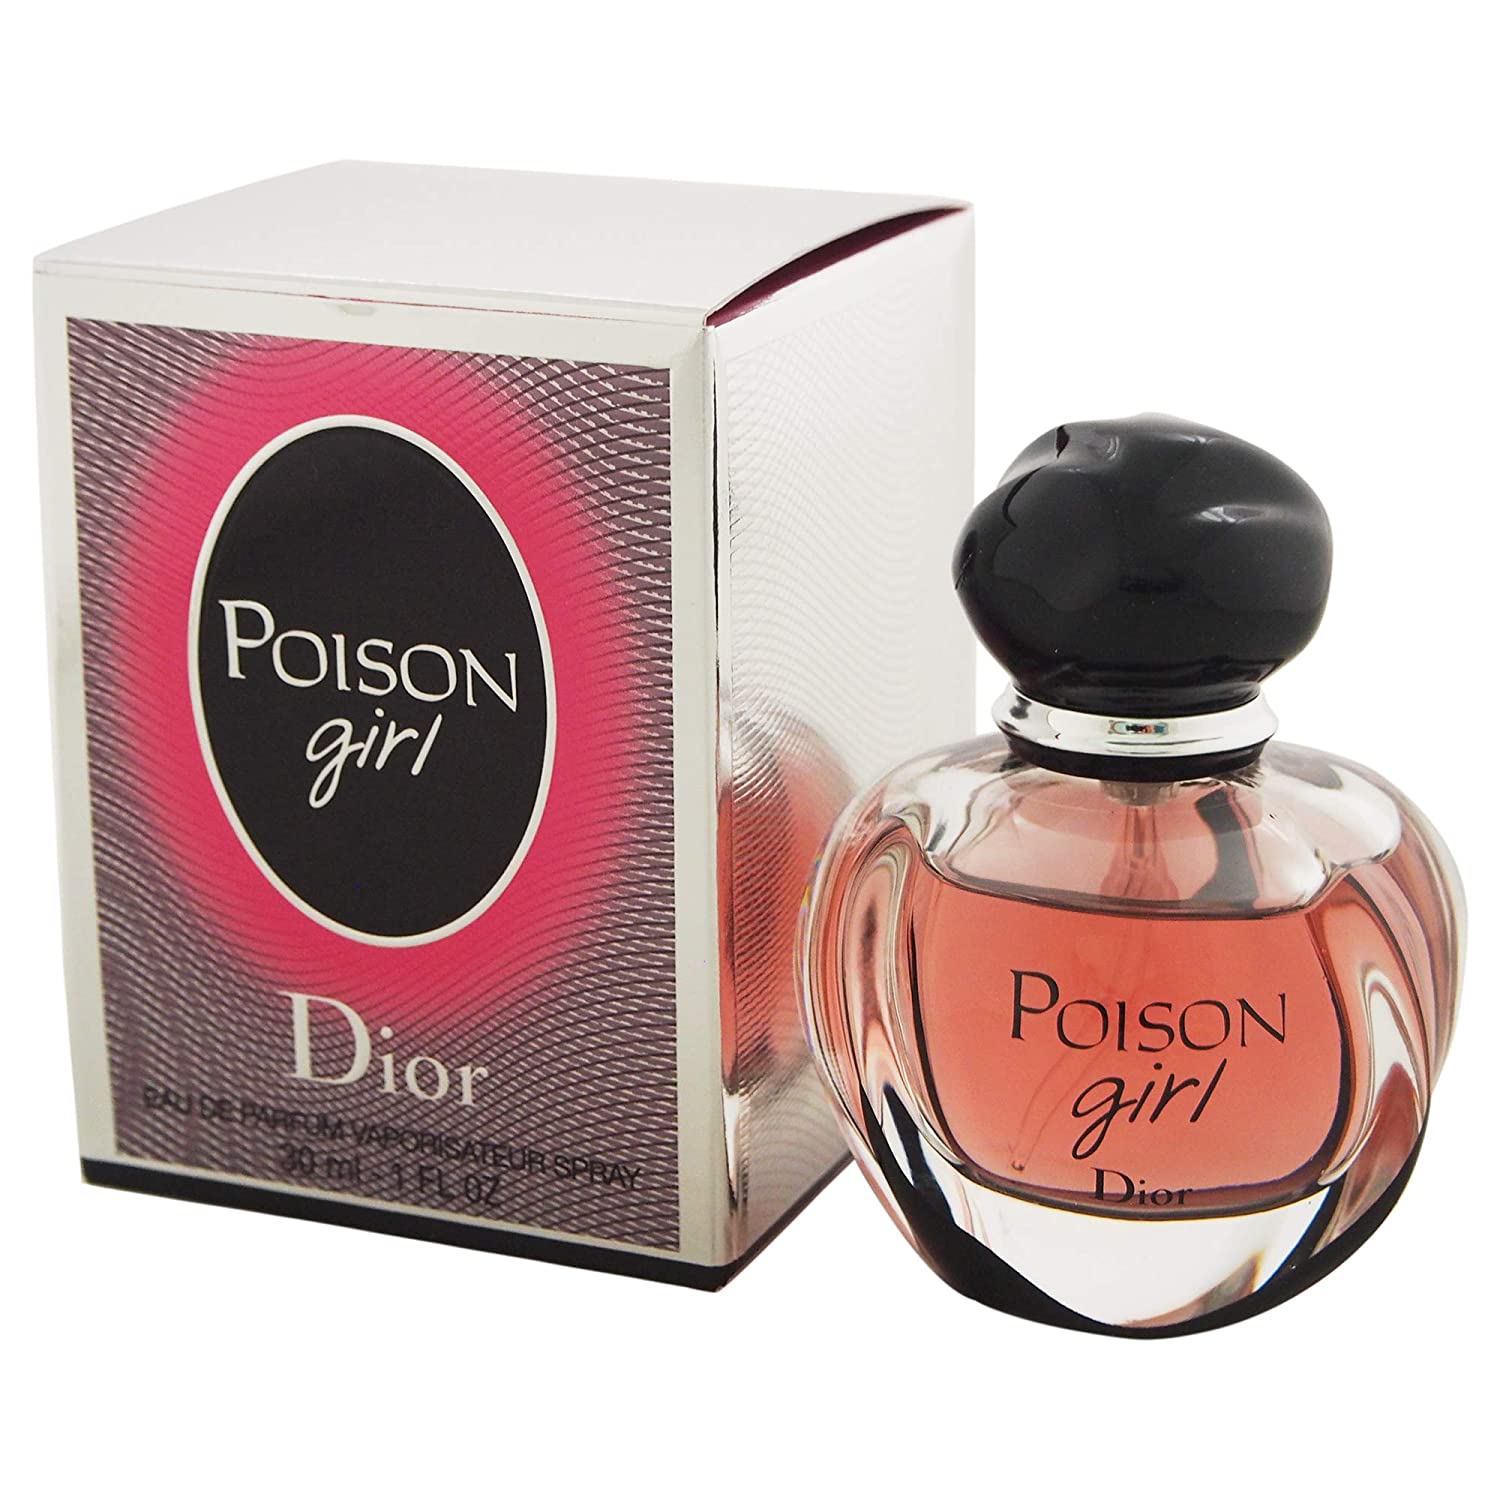 Dior  Poison  Girl  Eau de Parfum 50ml